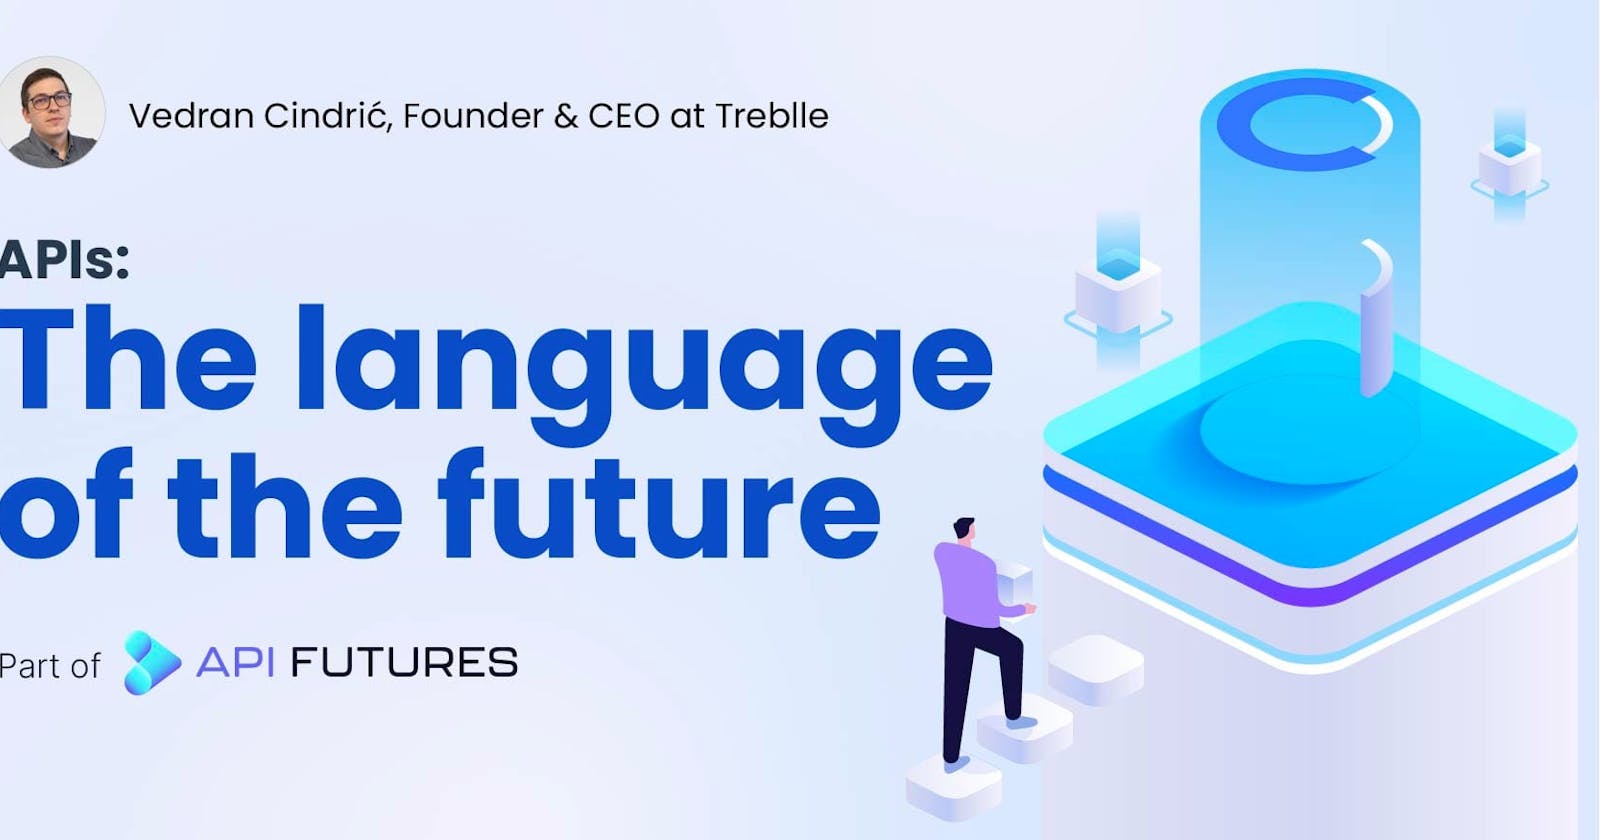 APIs - The language of the future